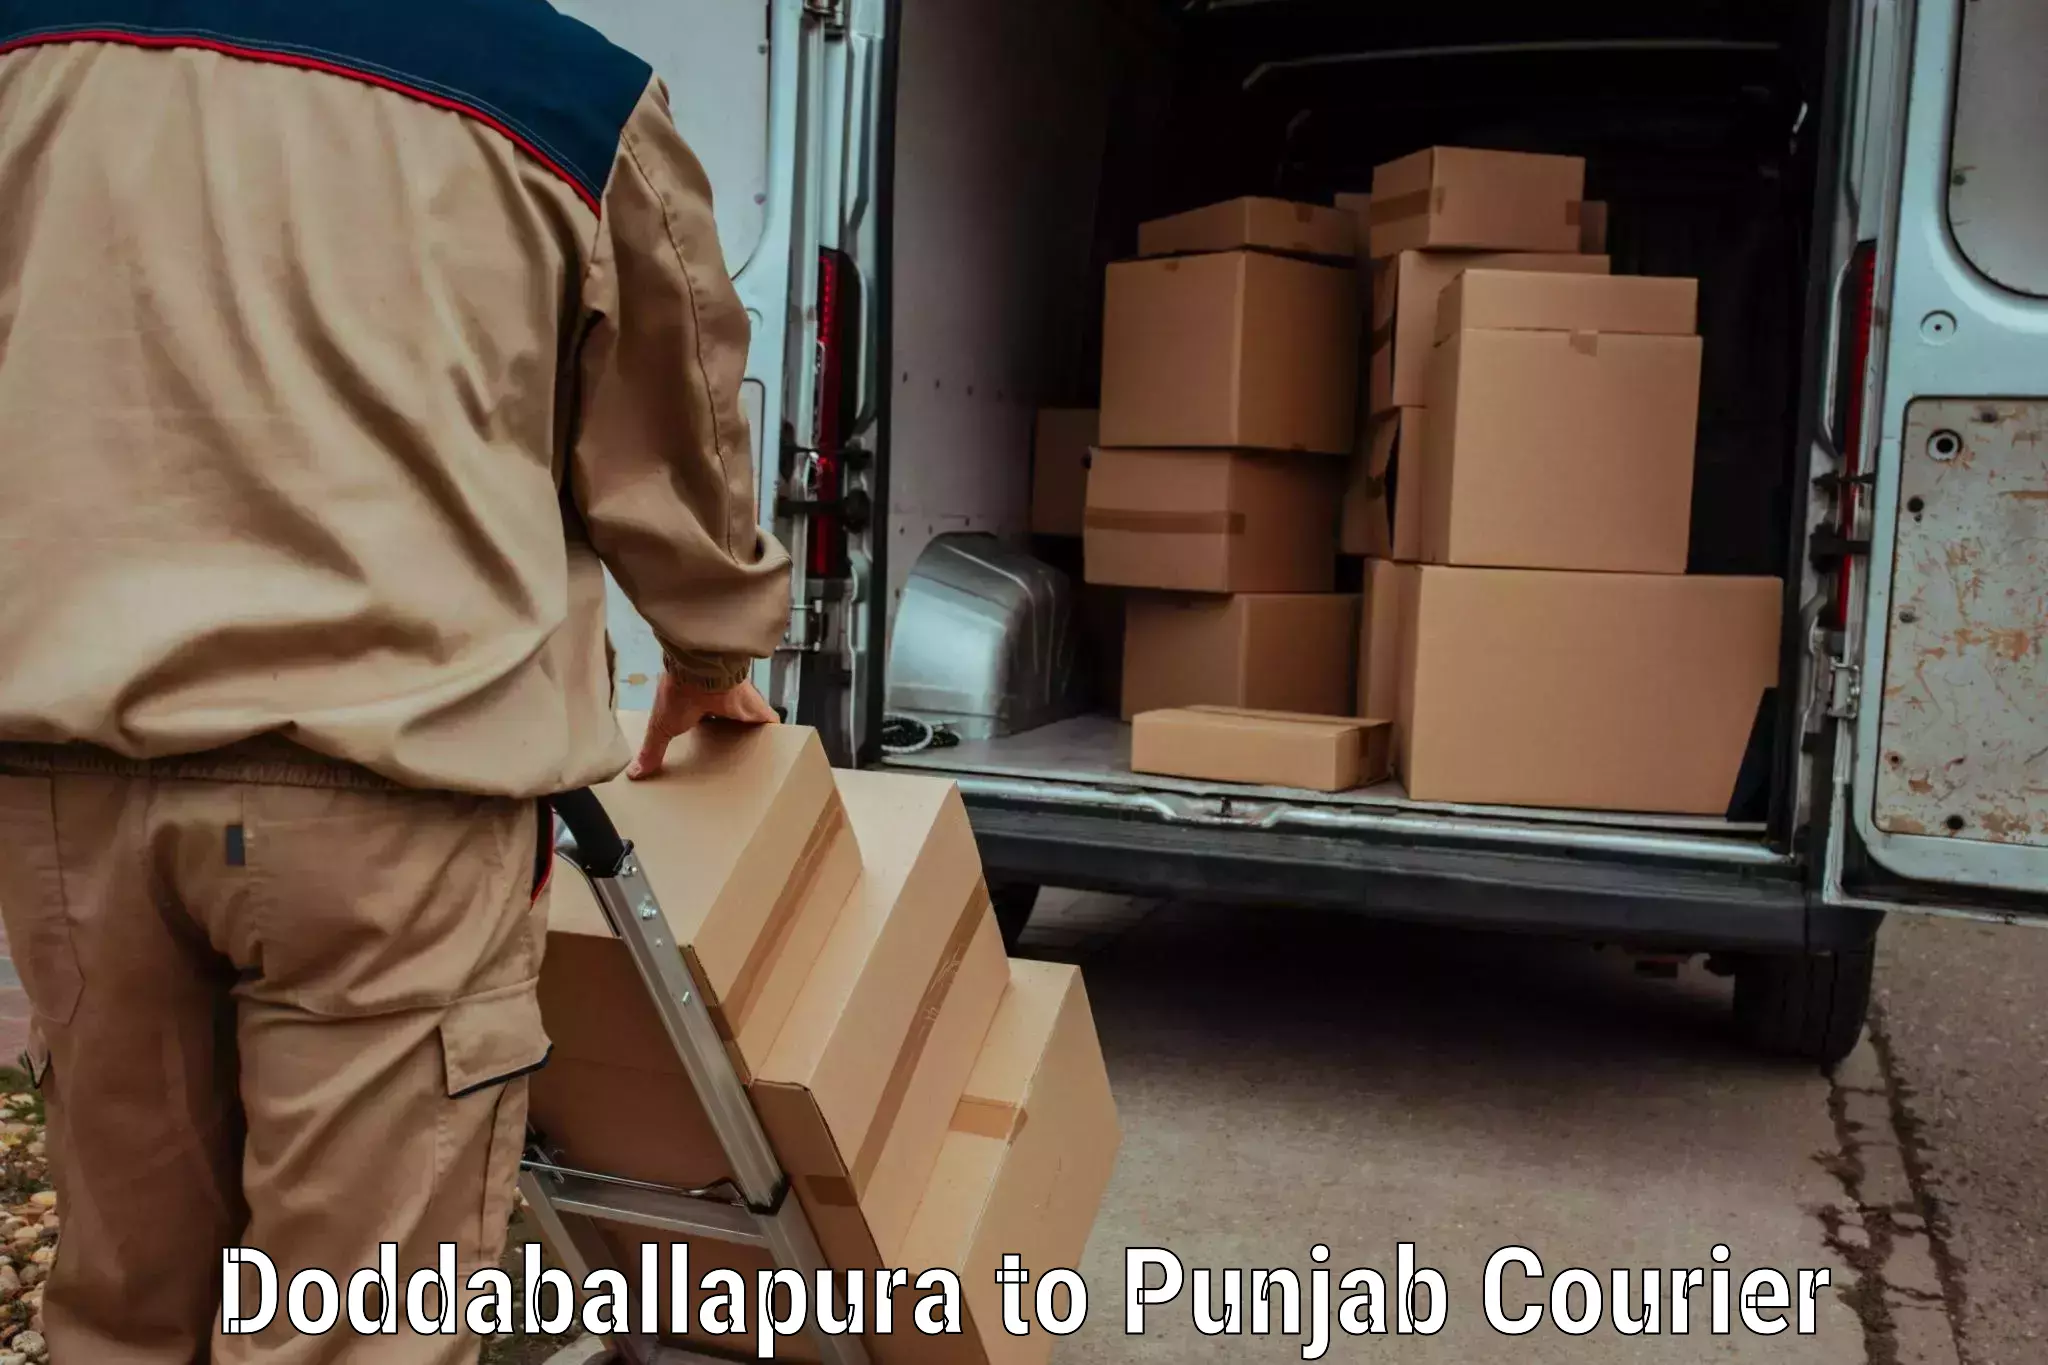 Next-day delivery options Doddaballapura to Mohali